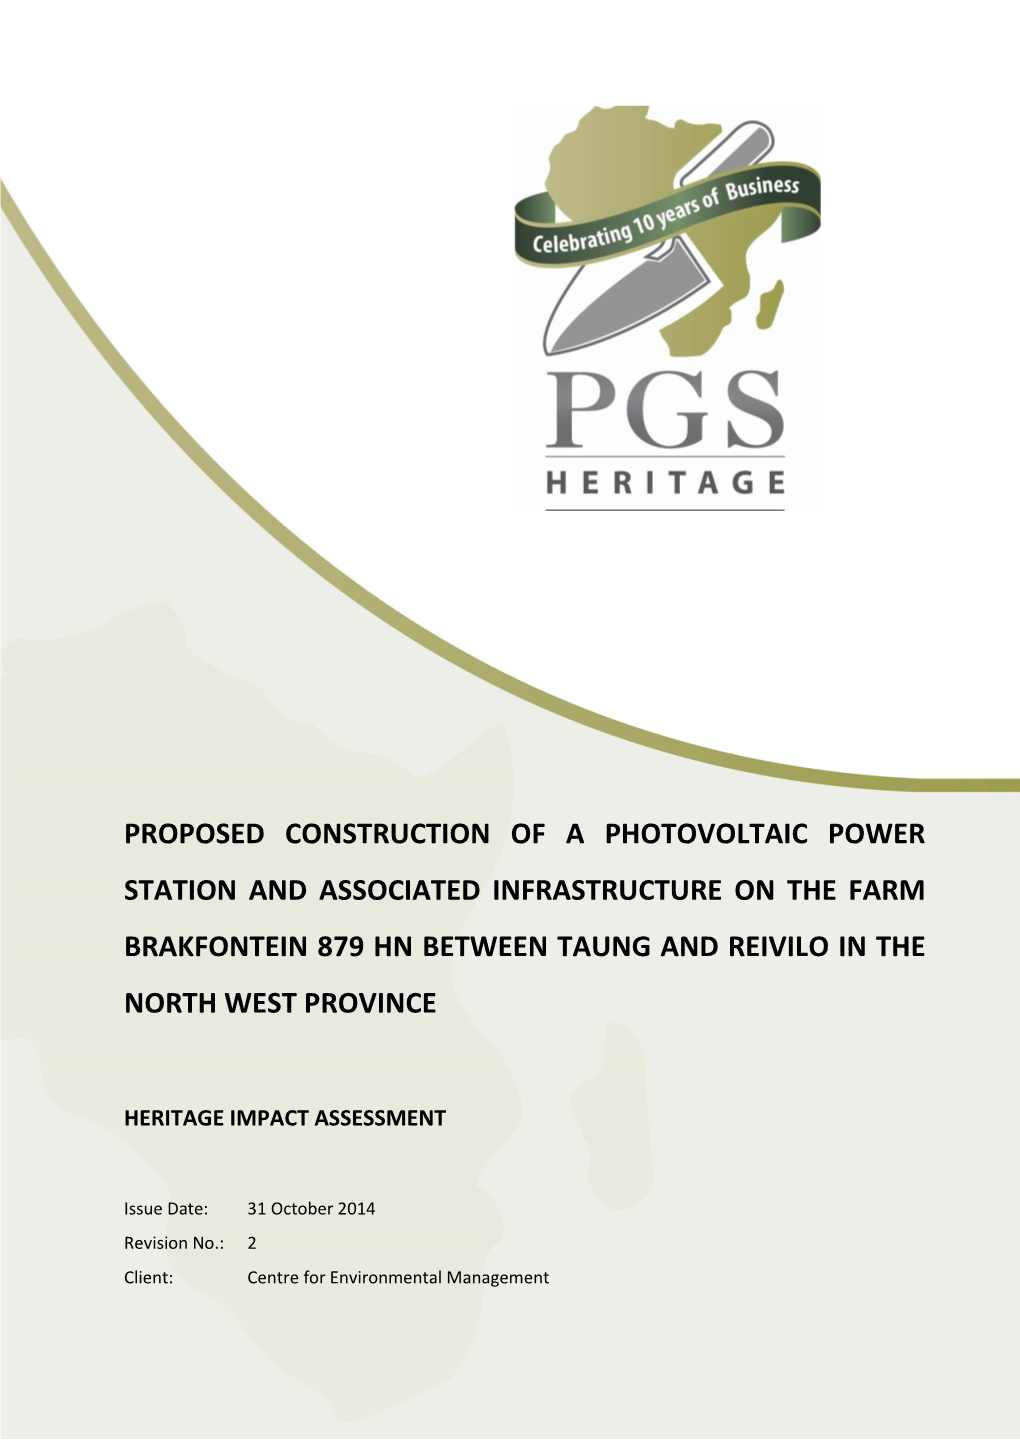 Heritage Impact Assessment for Brakfontein Solar PV Plant